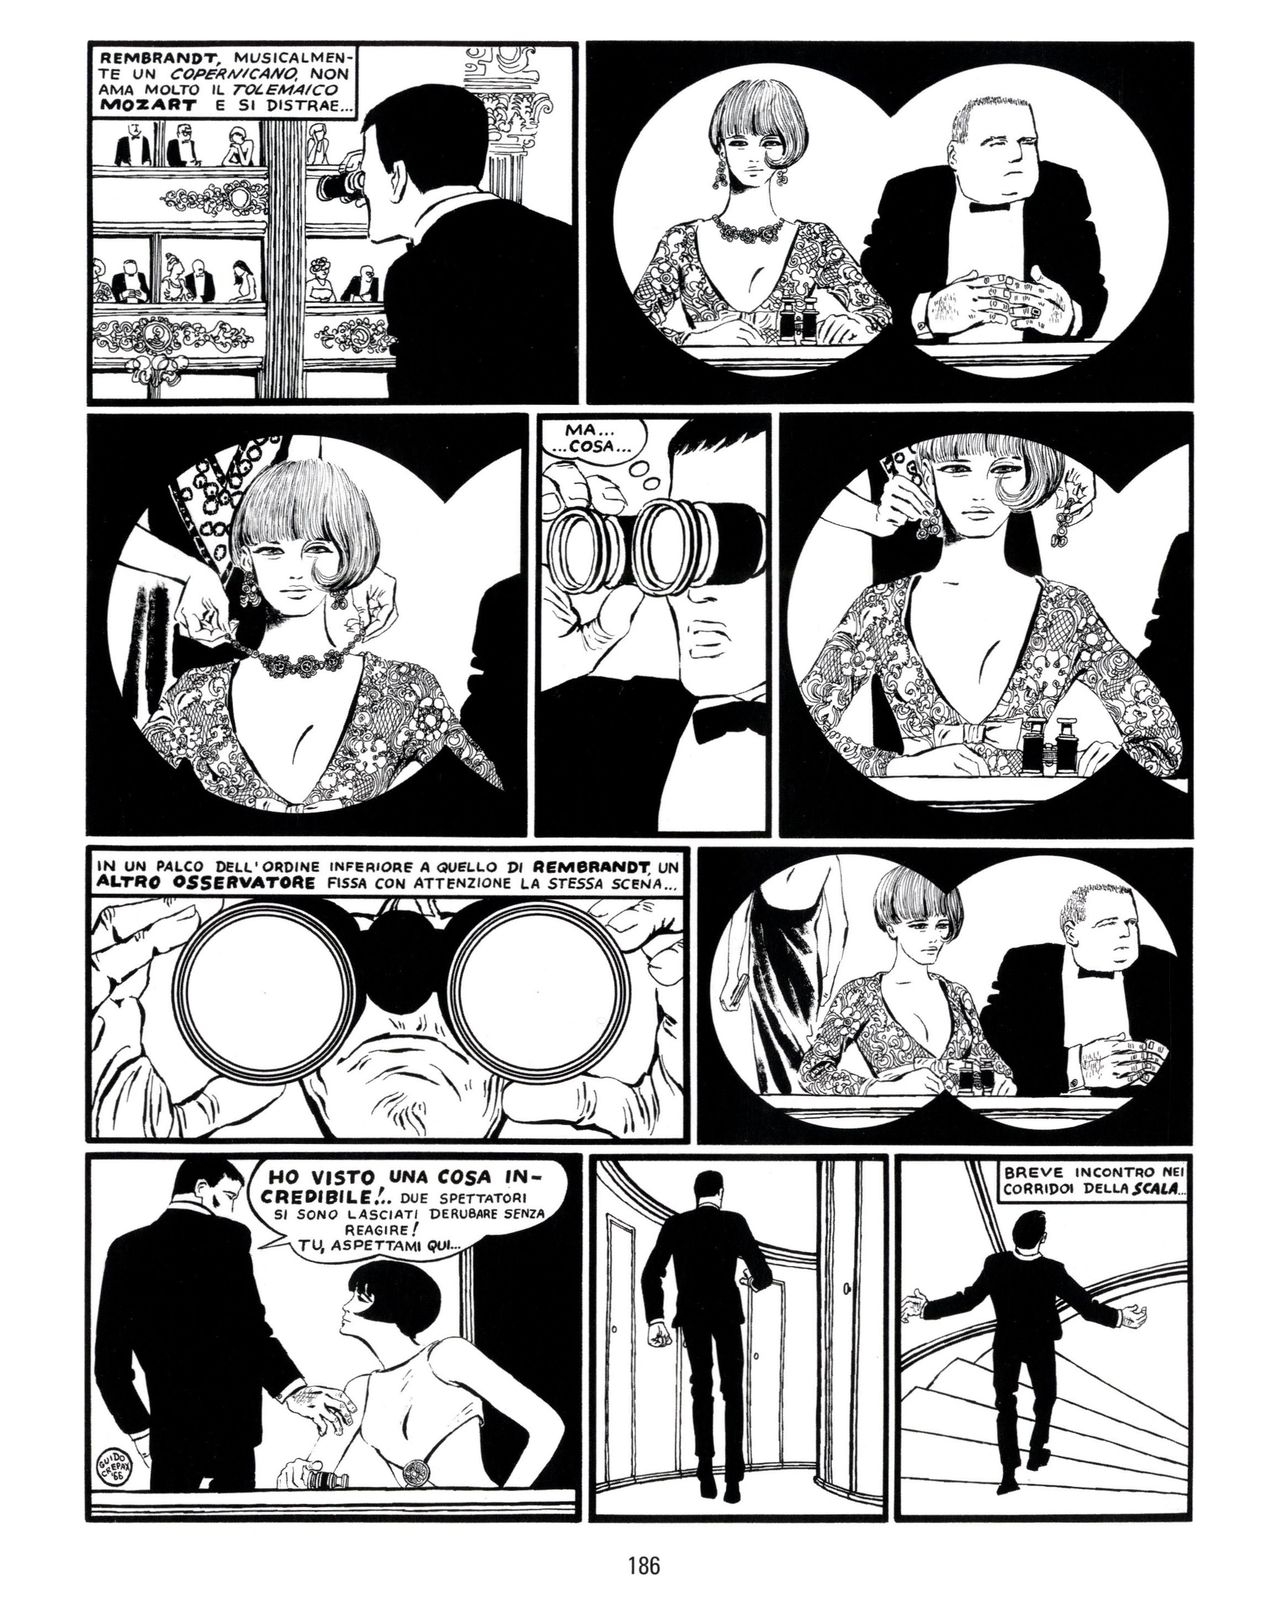 [Guido Crepax] Erotica Fumetti #25 : L'ascesa dei sotterranei : I cavalieri ciechi [Italian] 187